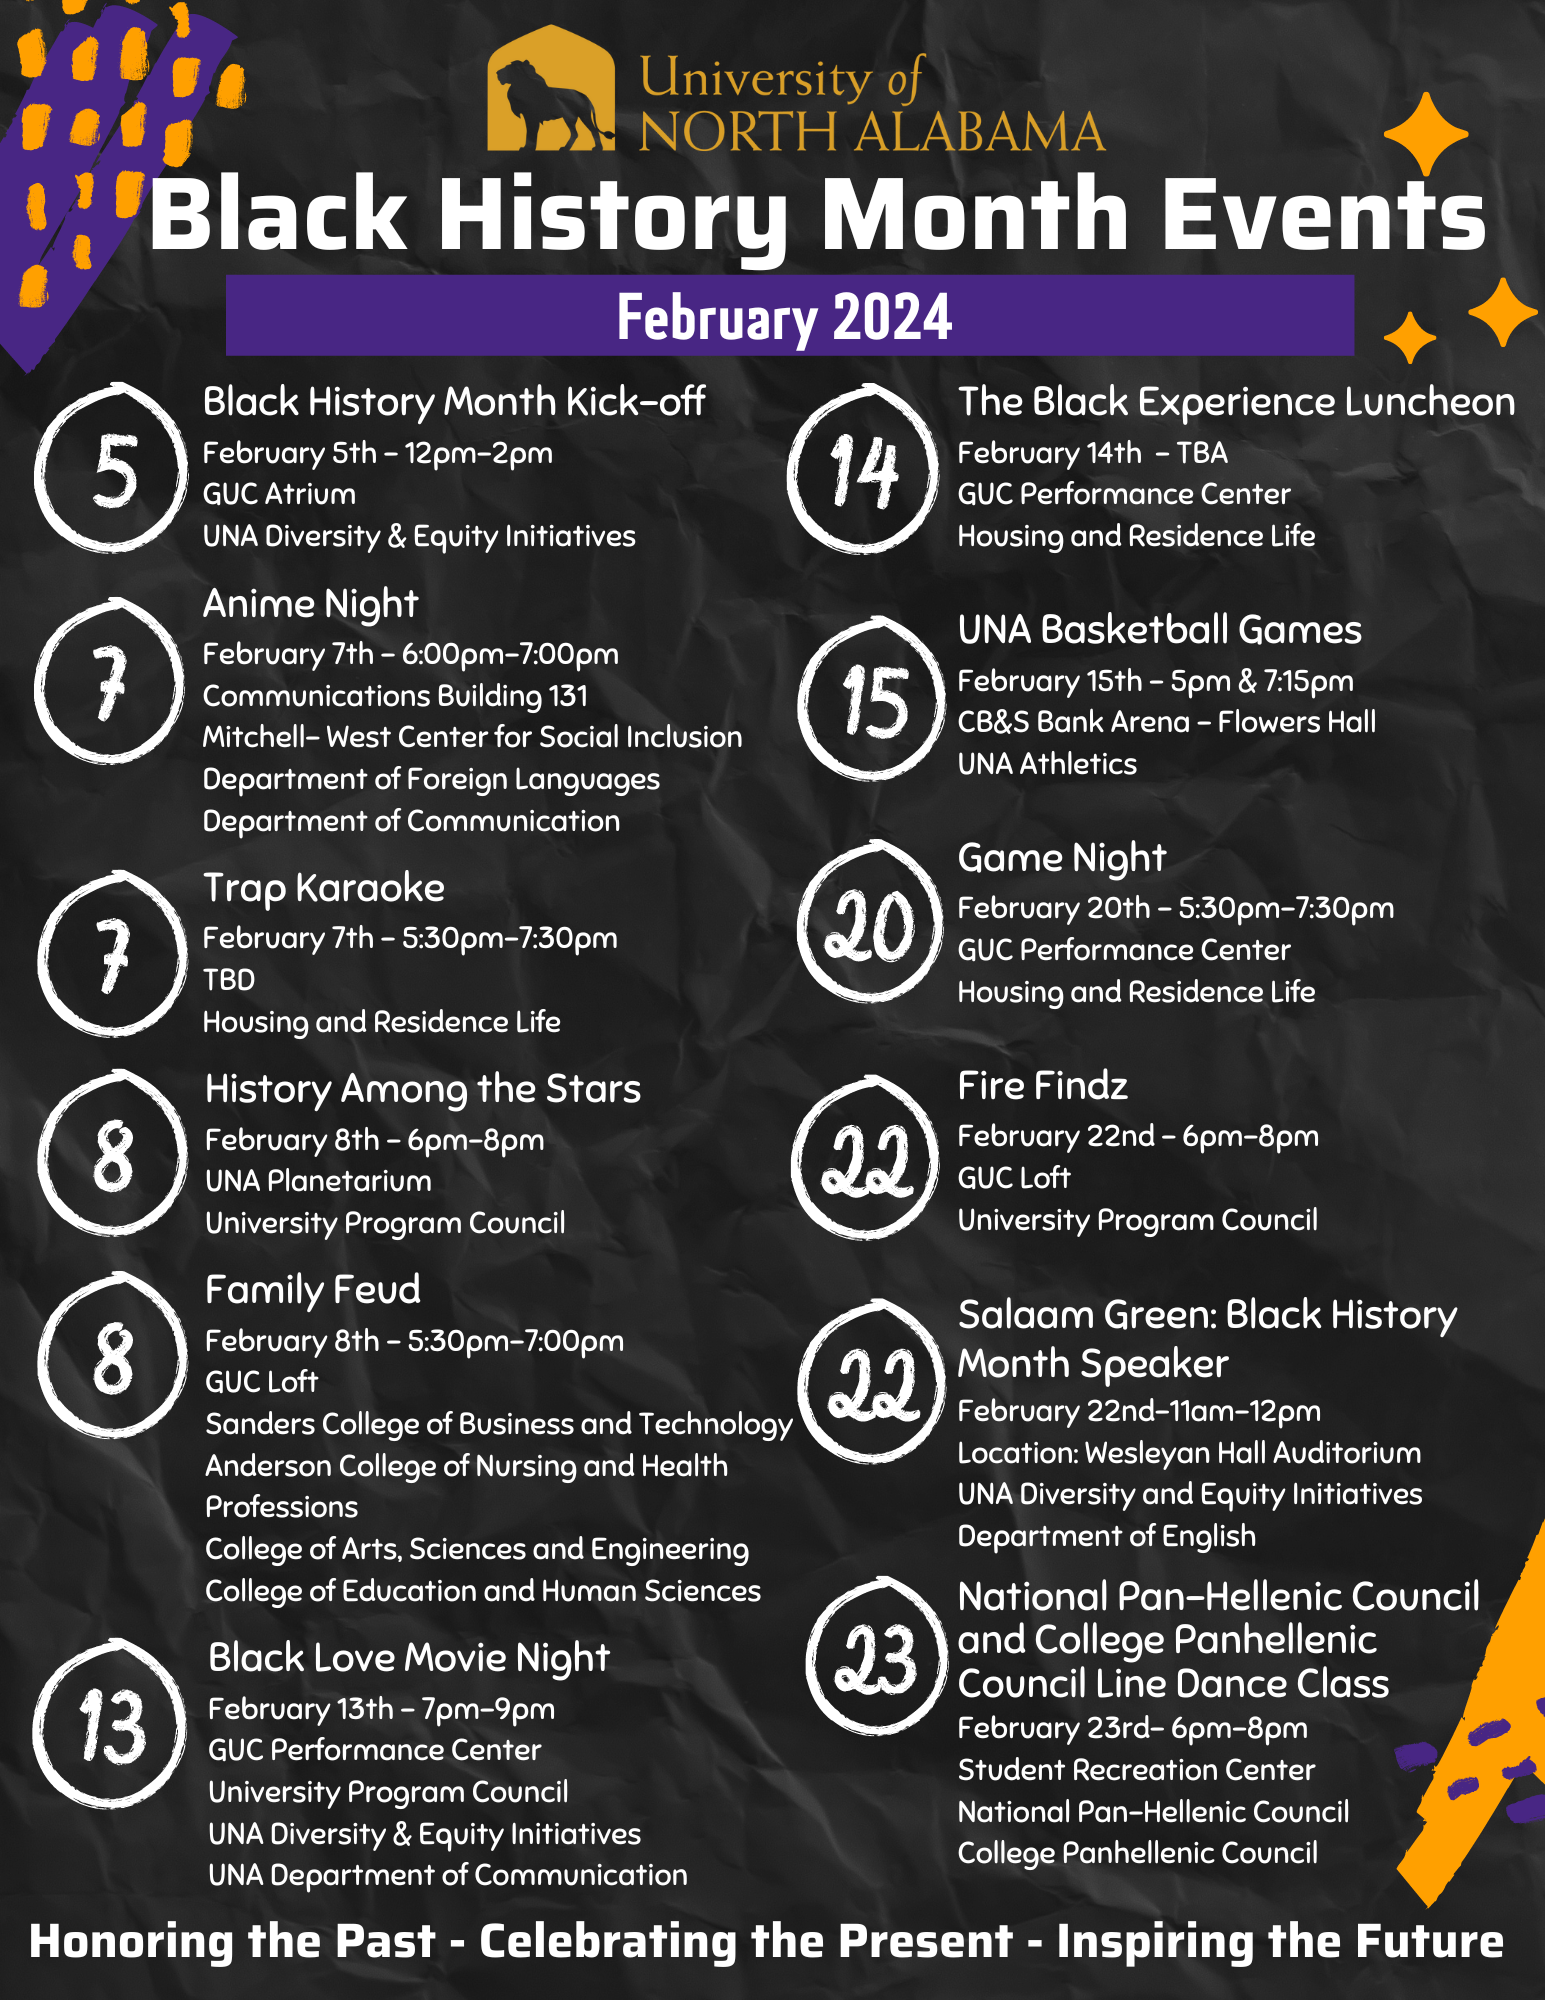 Black History Month Event Calendar